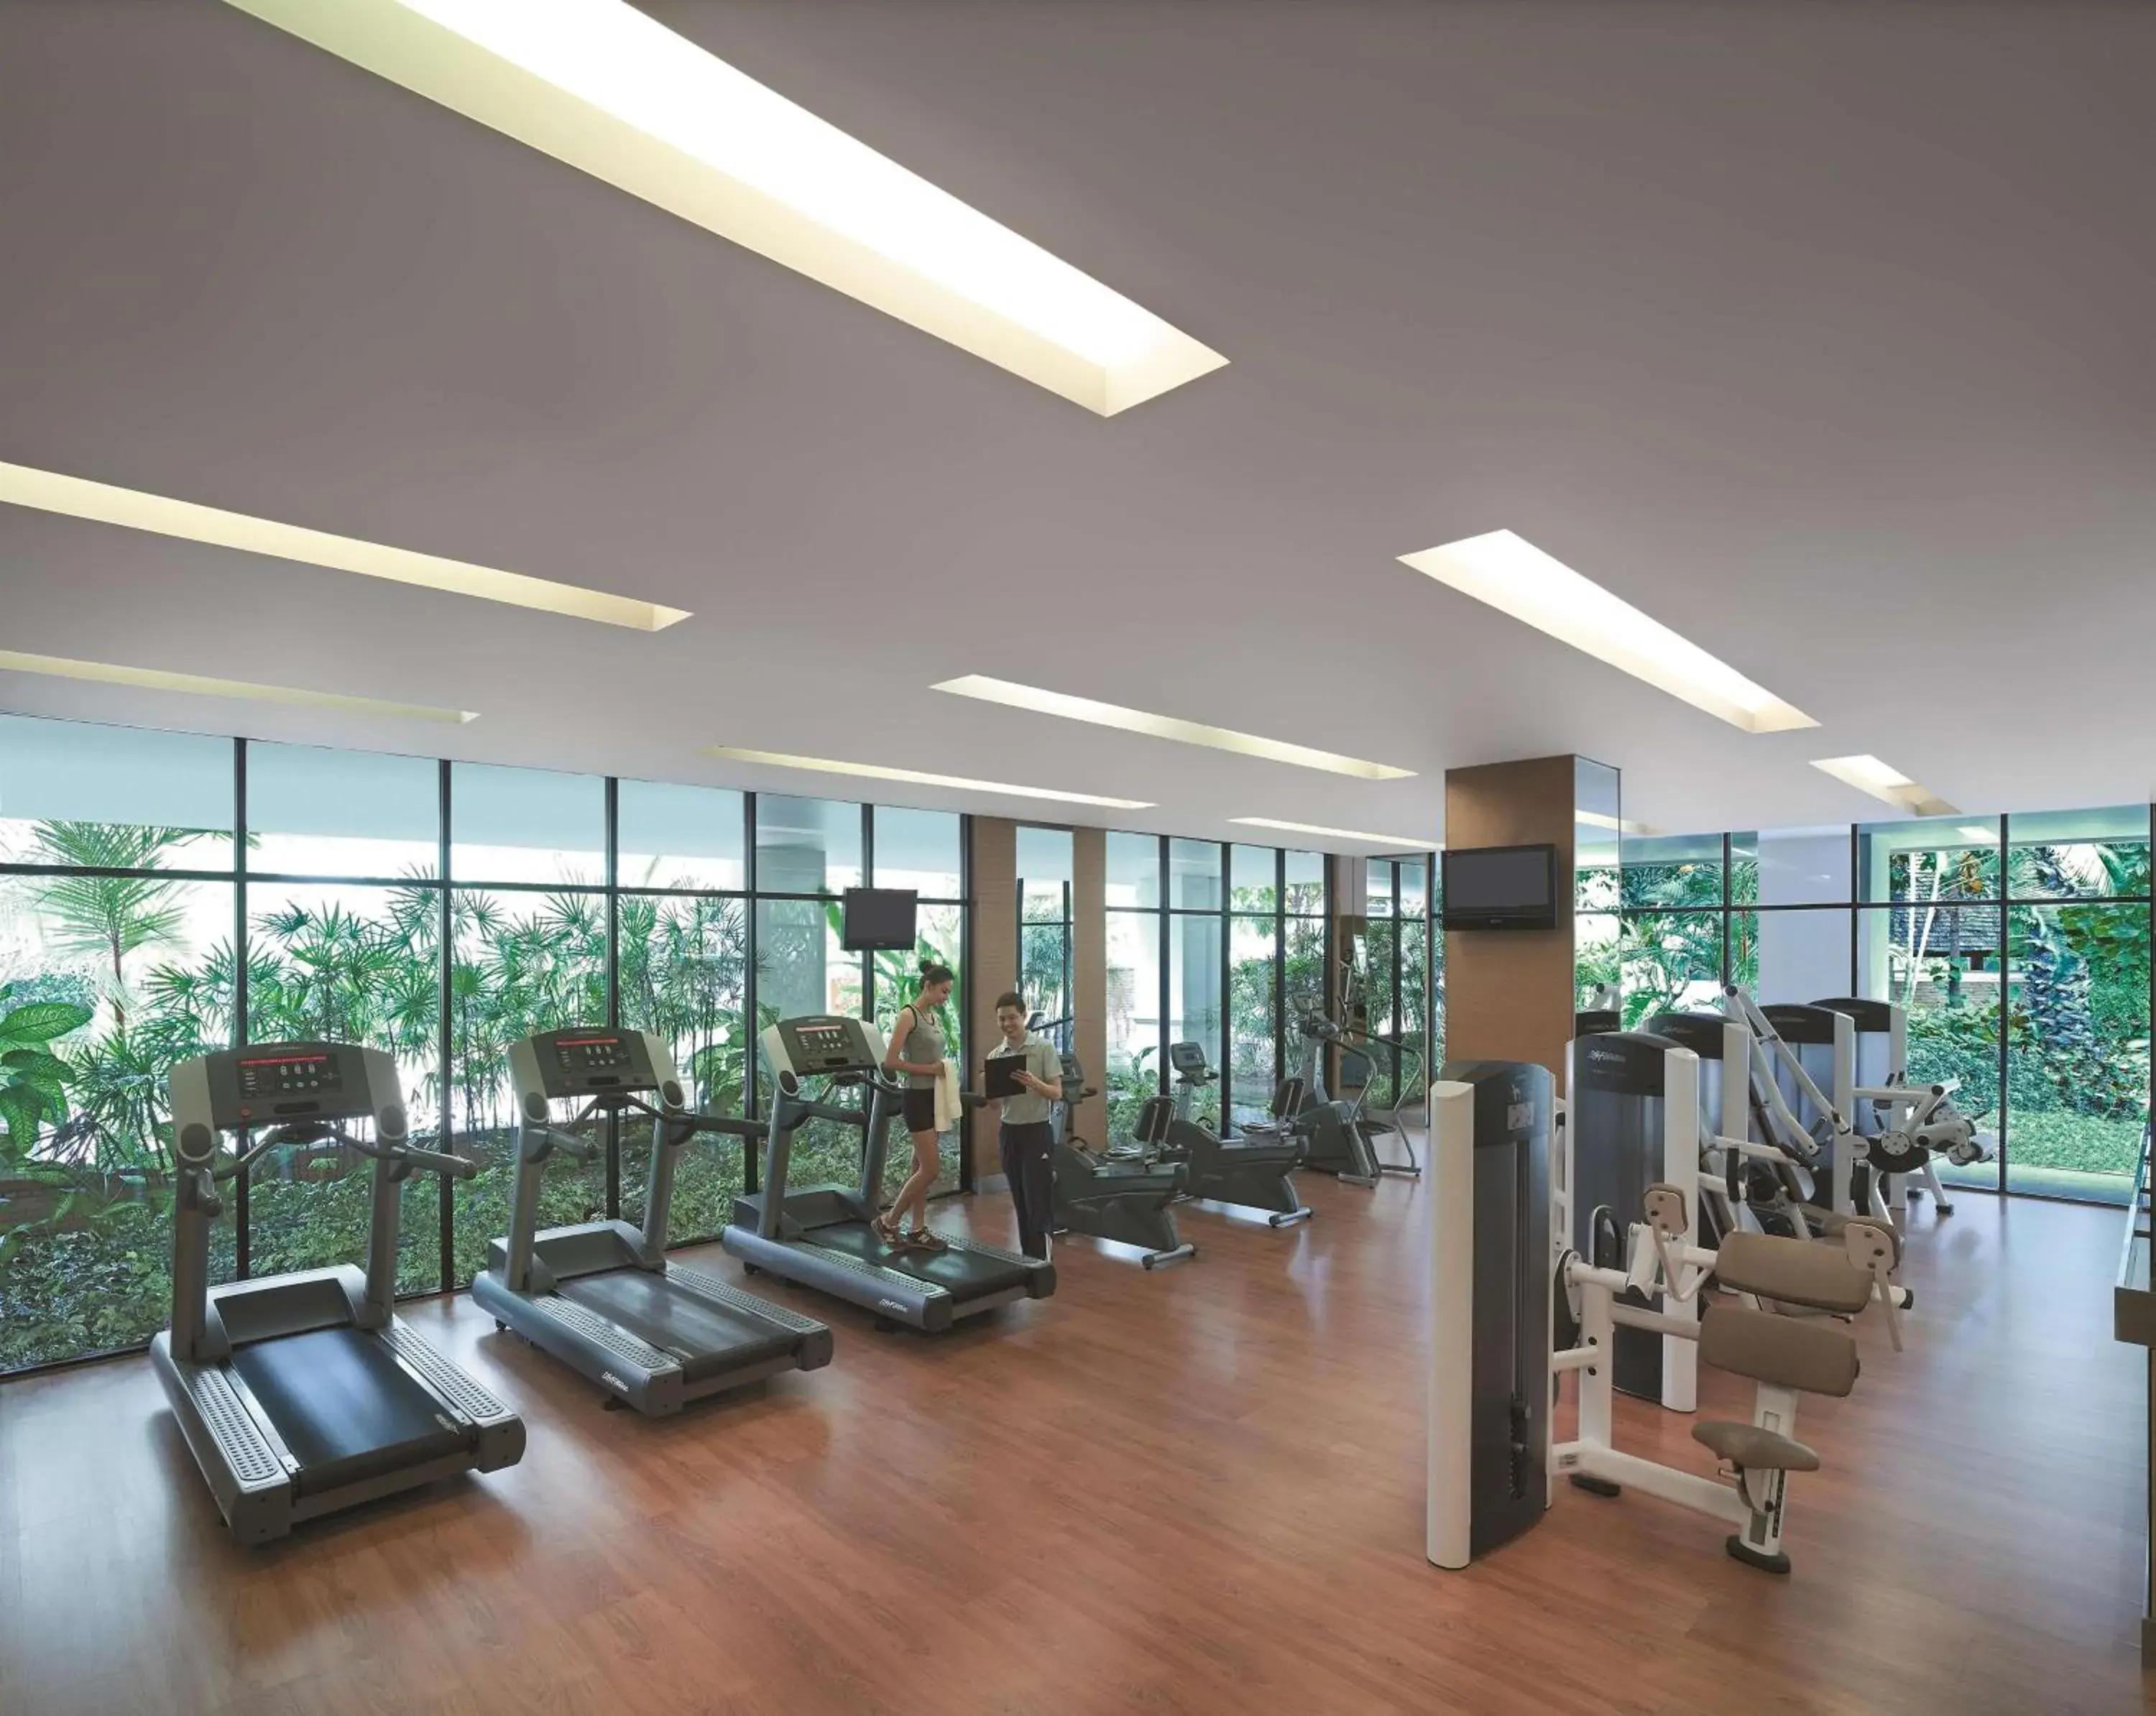 Fitness centre/facilities, Fitness Center/Facilities in Shangri-La Chiang Mai